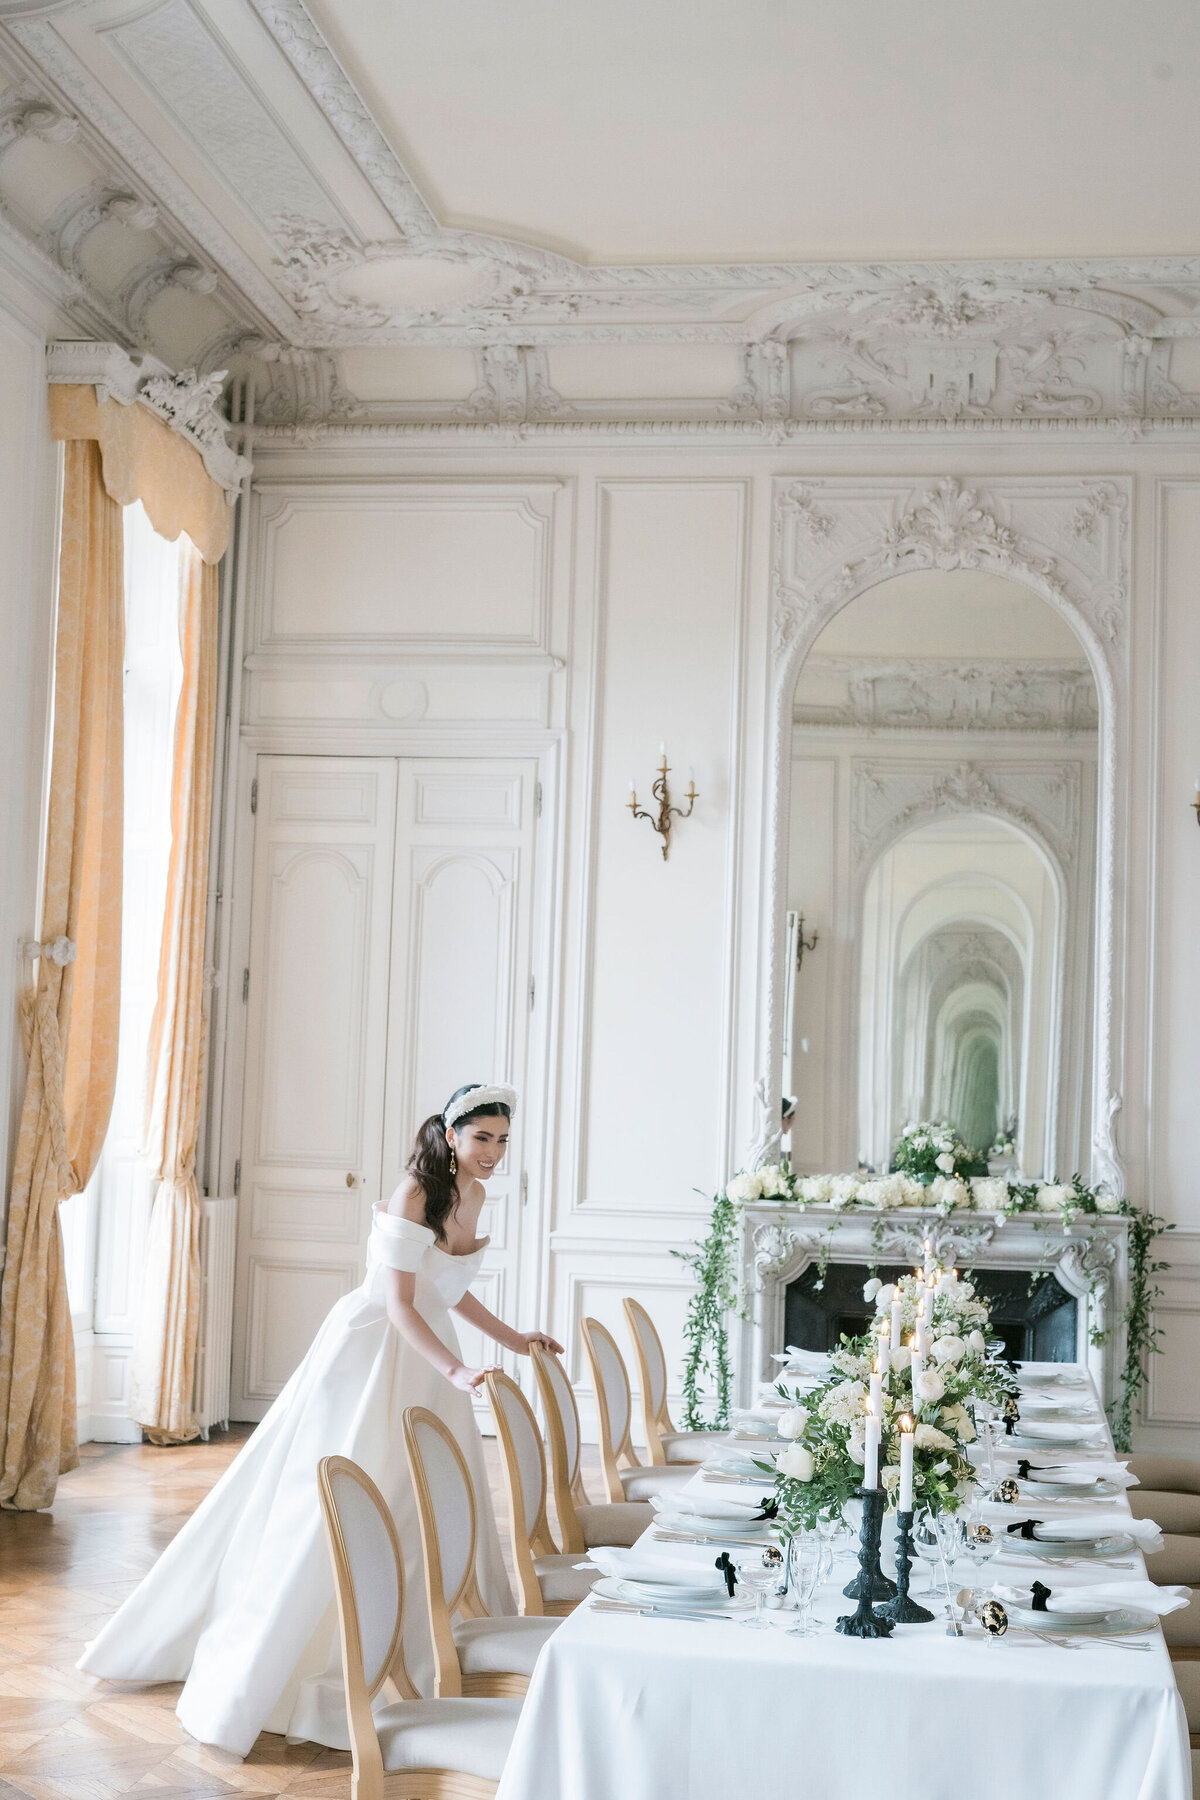 106-Chateau-de-Santeny-Paris-France-Inspiration-Love-Story Elopement-Cinematic-Romance-Destination-Wedding-Editorial-Luxury-Fine-Art-Lisa-Vigliotta-Photography